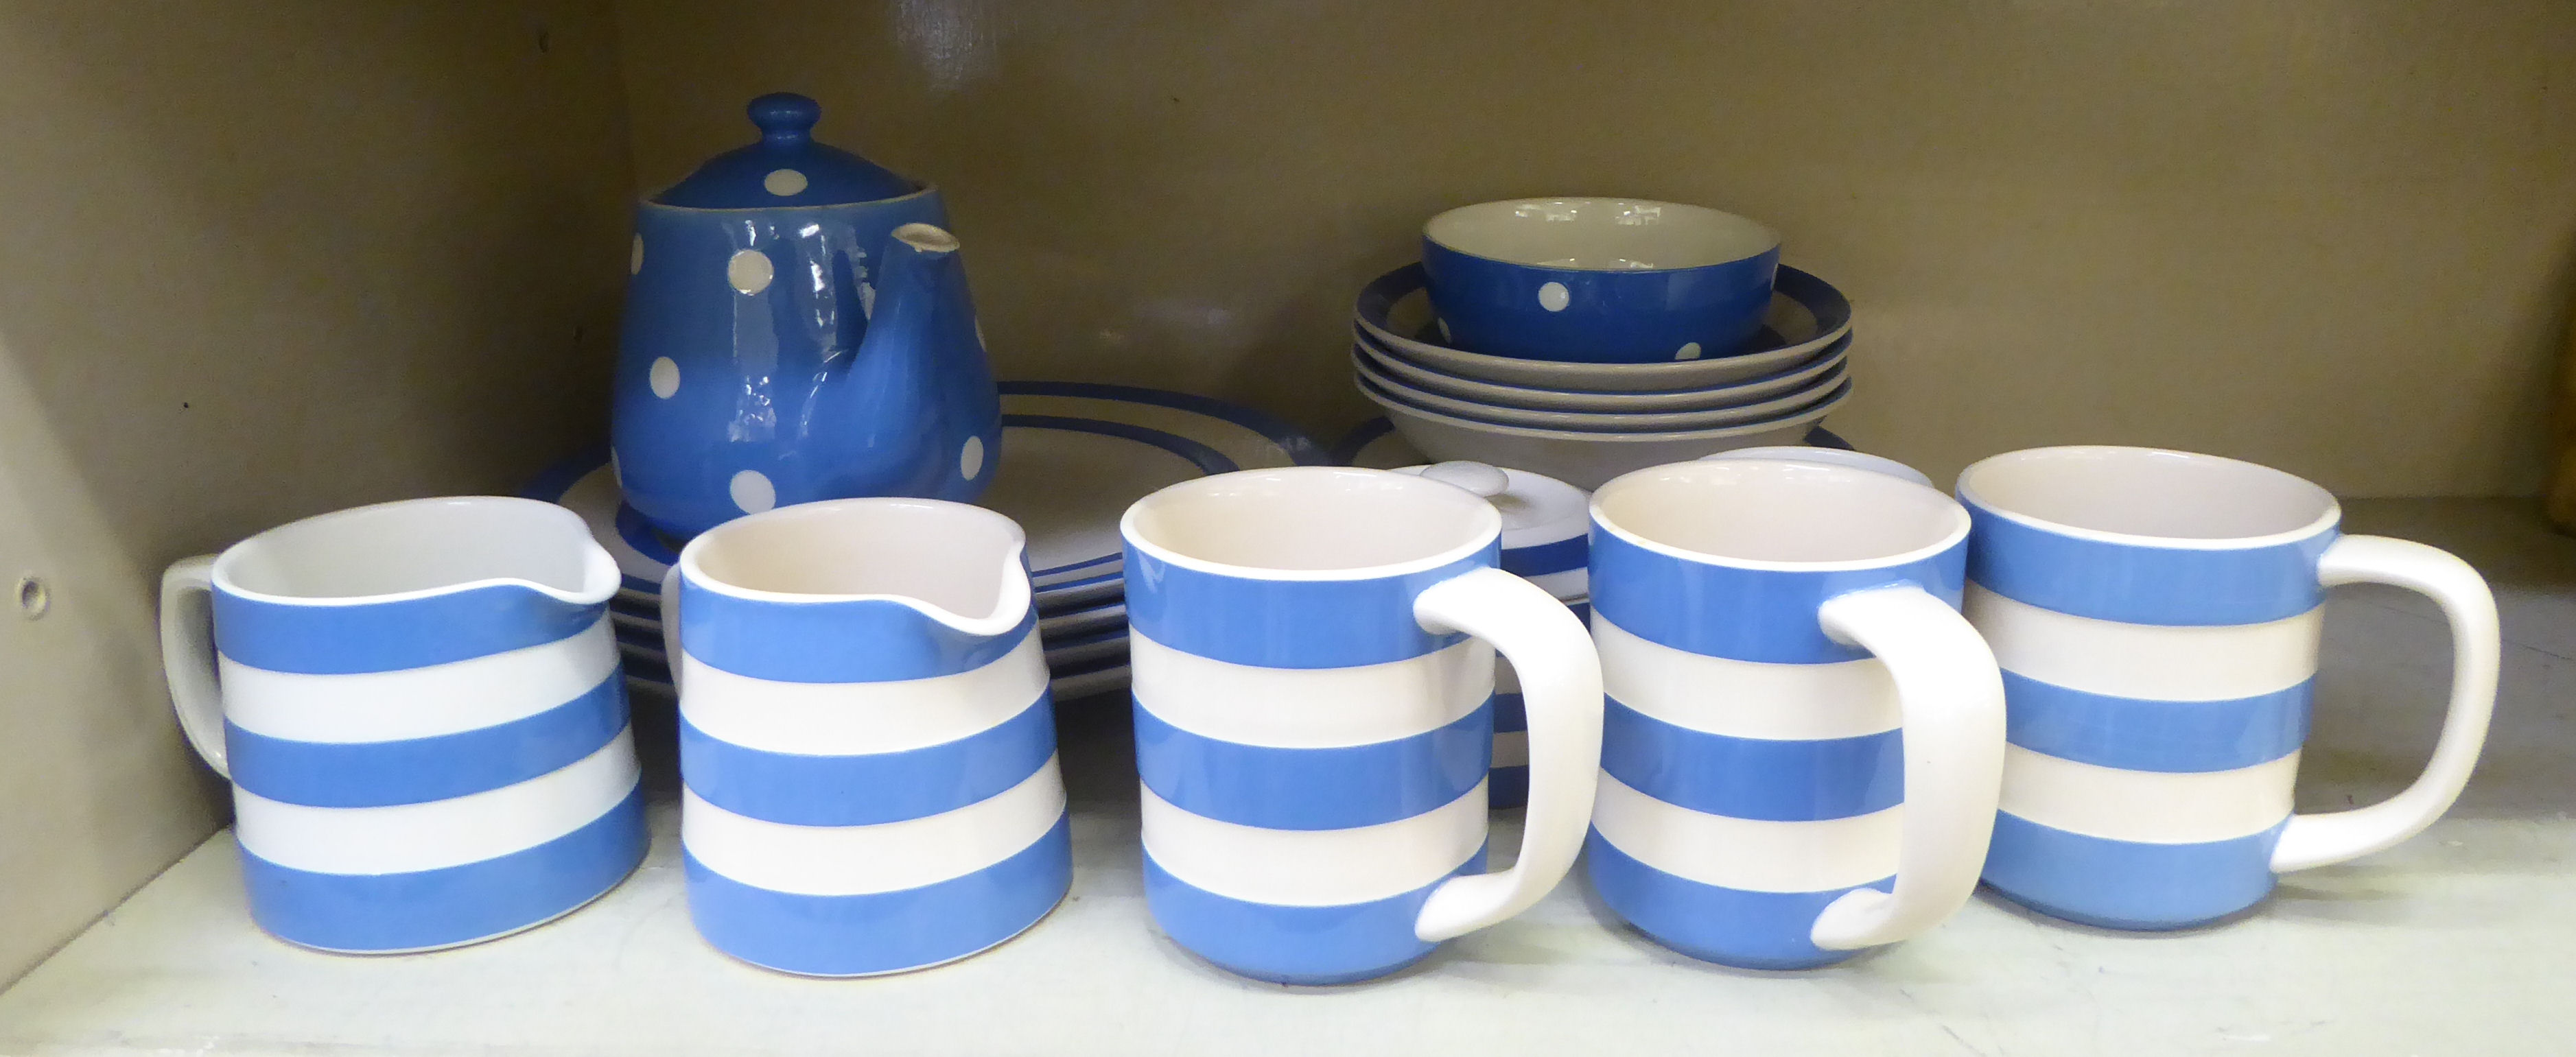 Similar TG Green pottery Blue Cornishware: to include four dinner plates  10"dia; three mugs; a milk